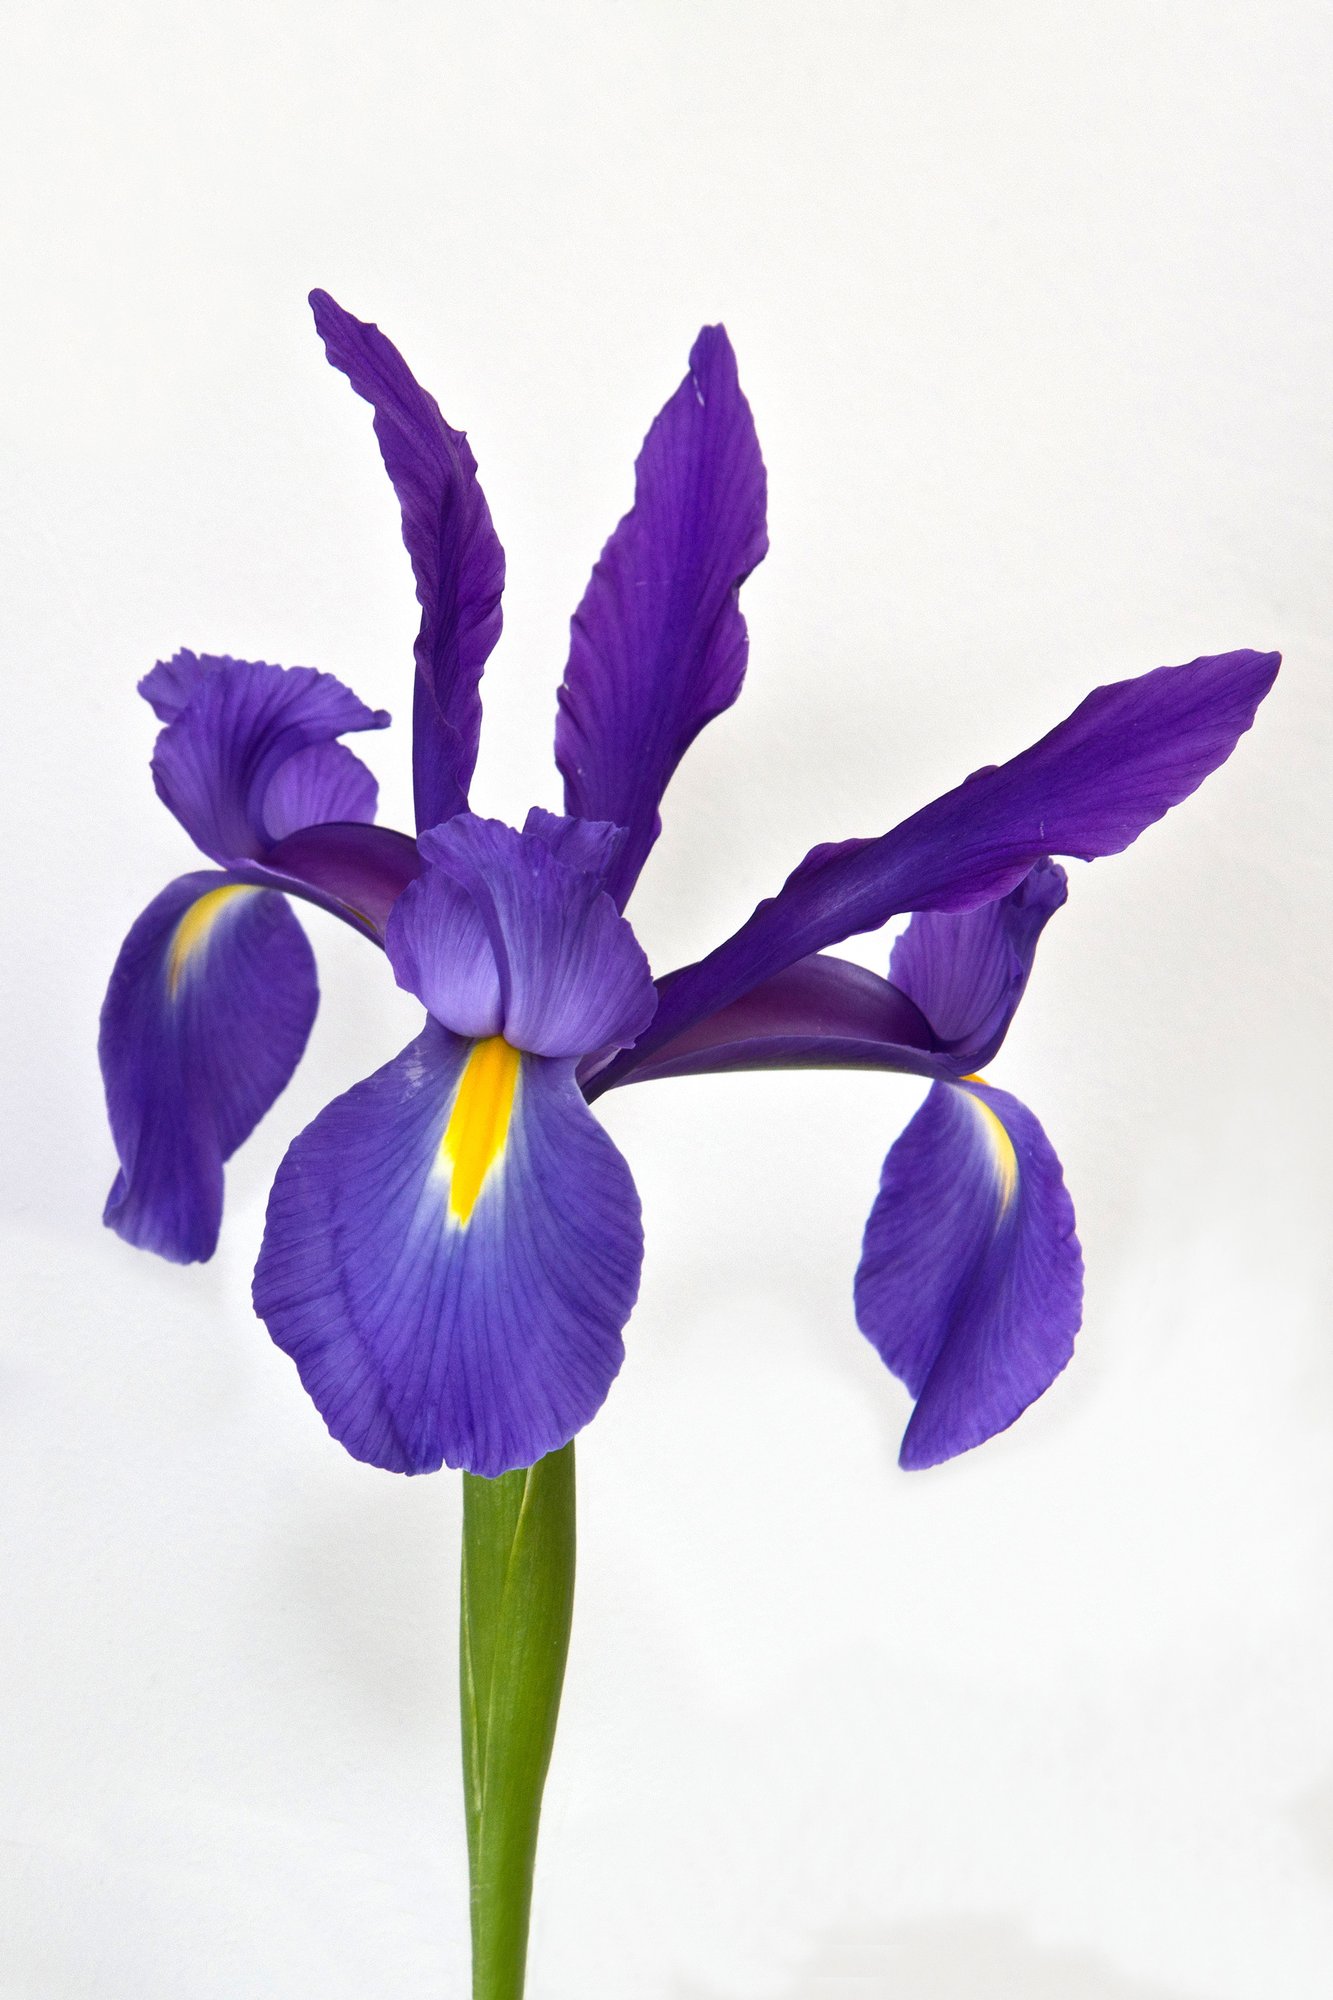 Blue iris flower photo